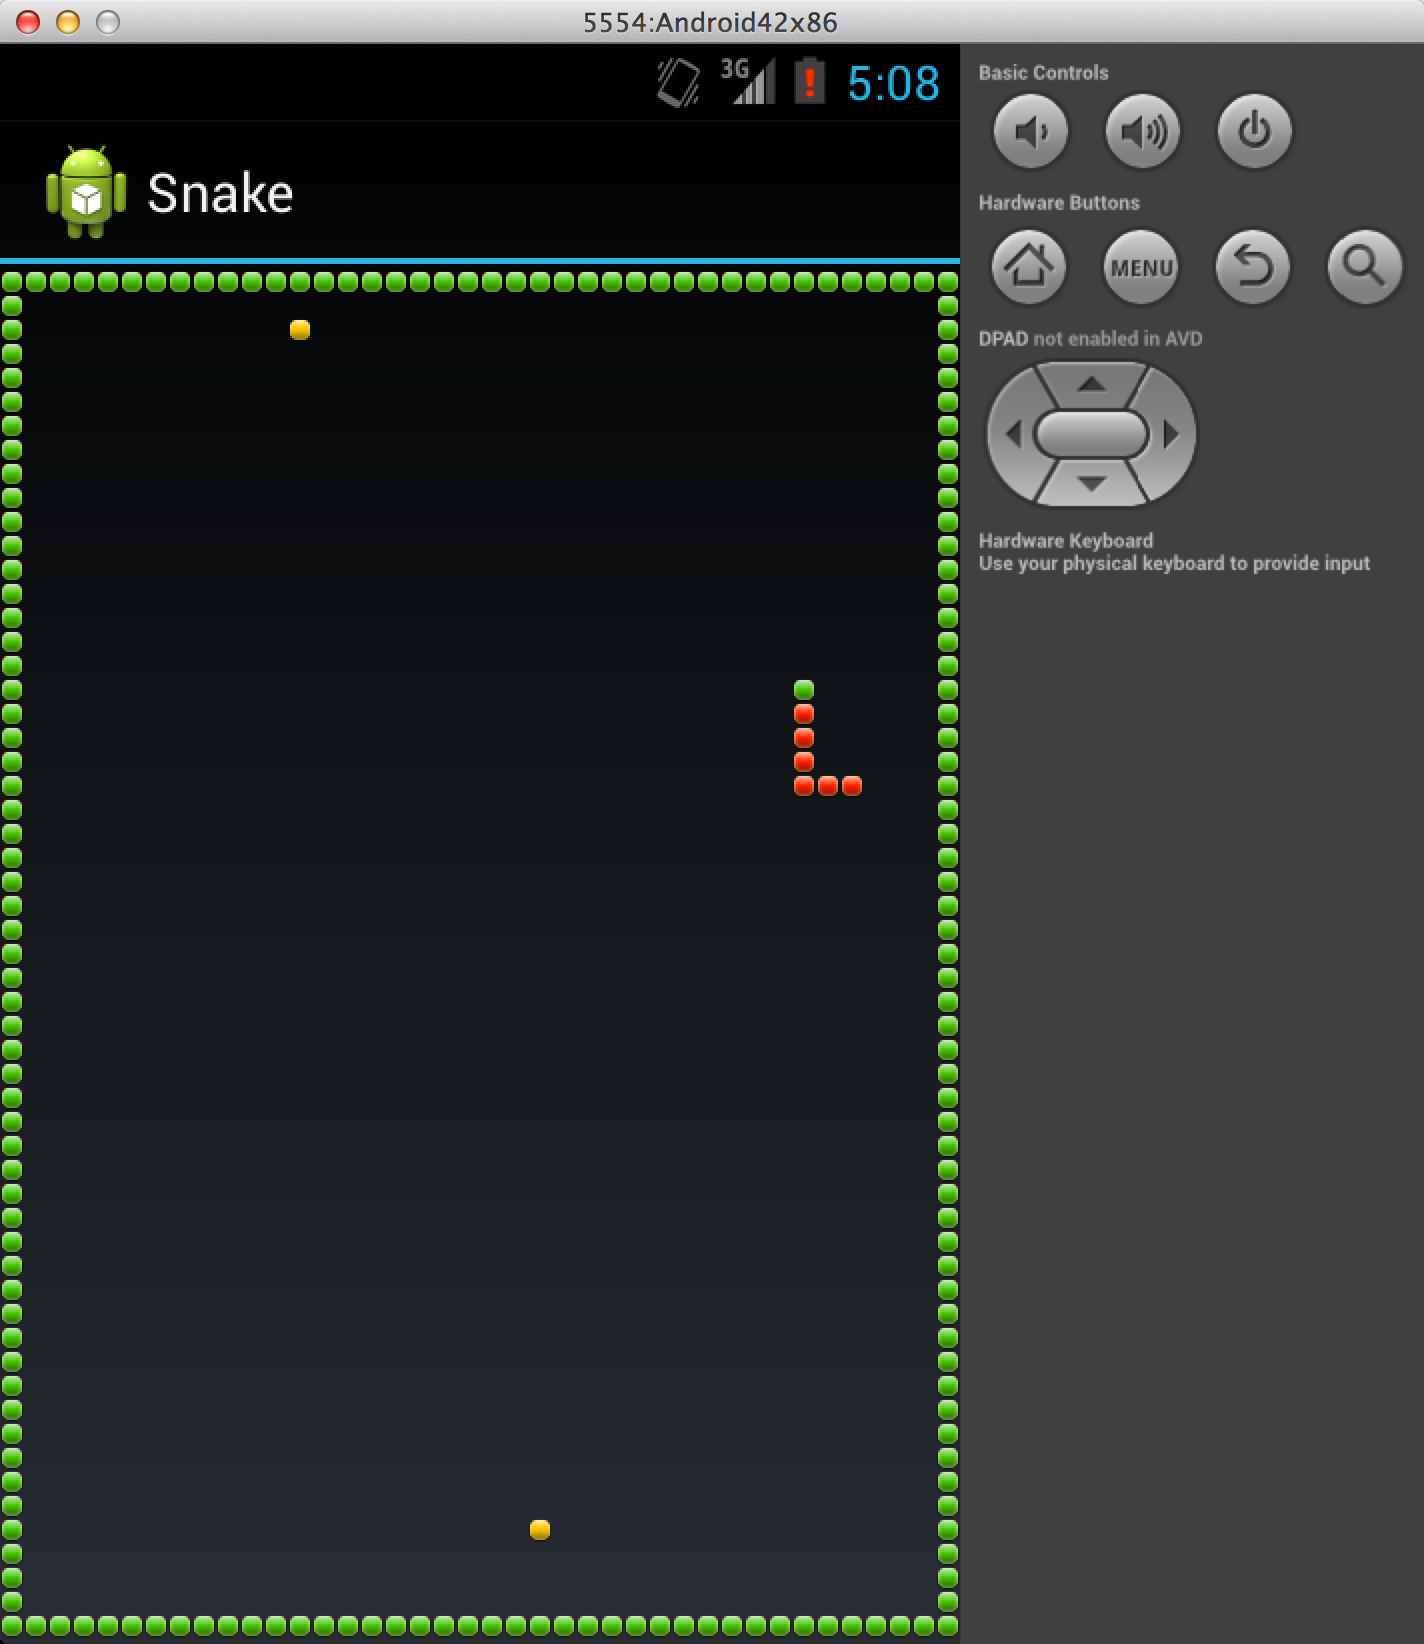 A screenshot of the Snake game